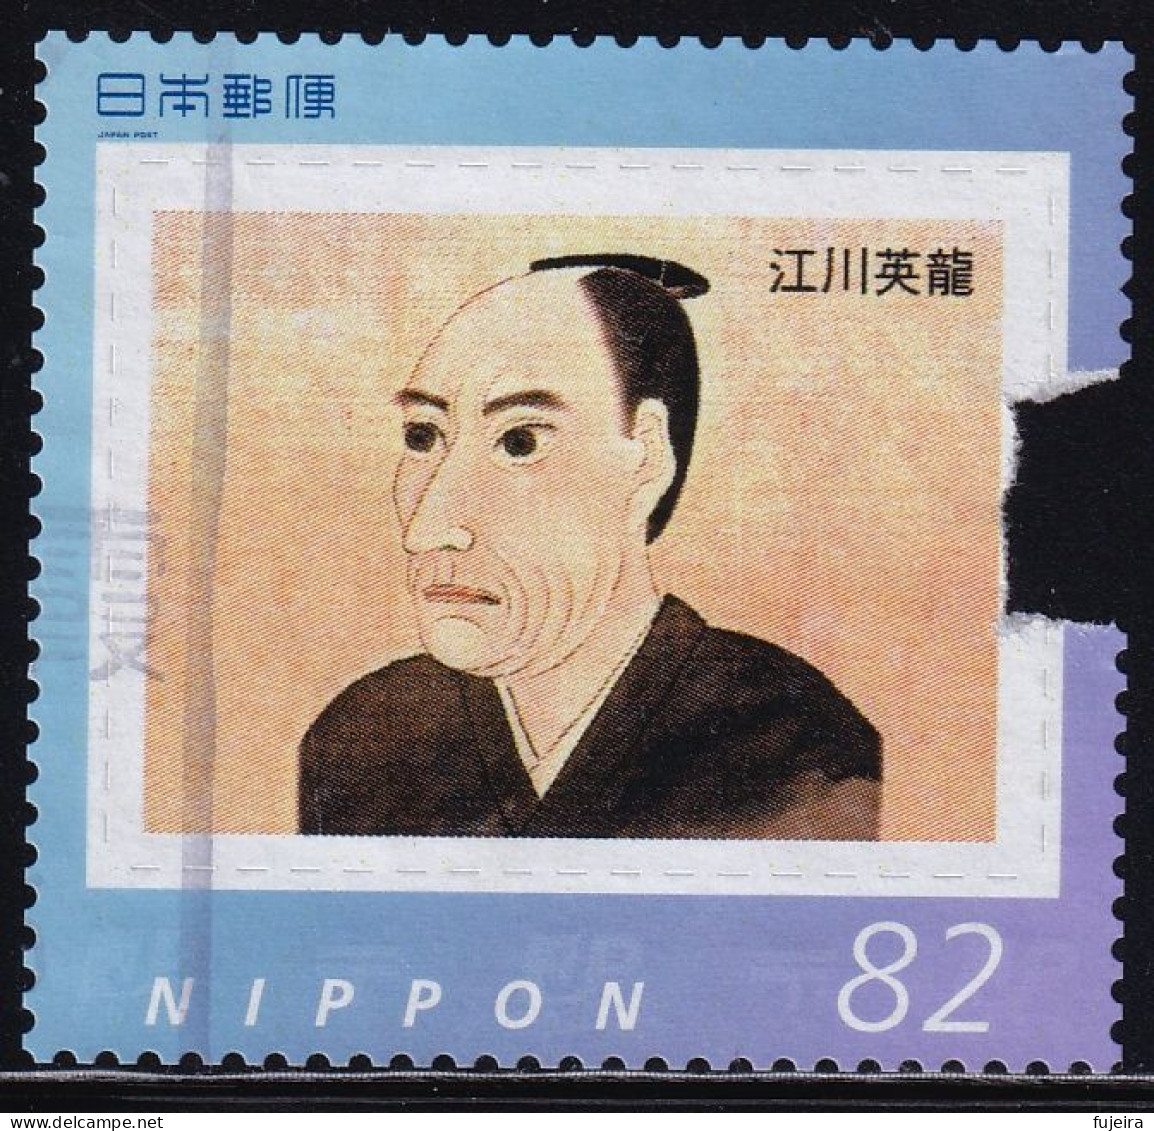 Japan Personalized Stamp, Hidetatsu Egawa (jpv9504) Used - Oblitérés